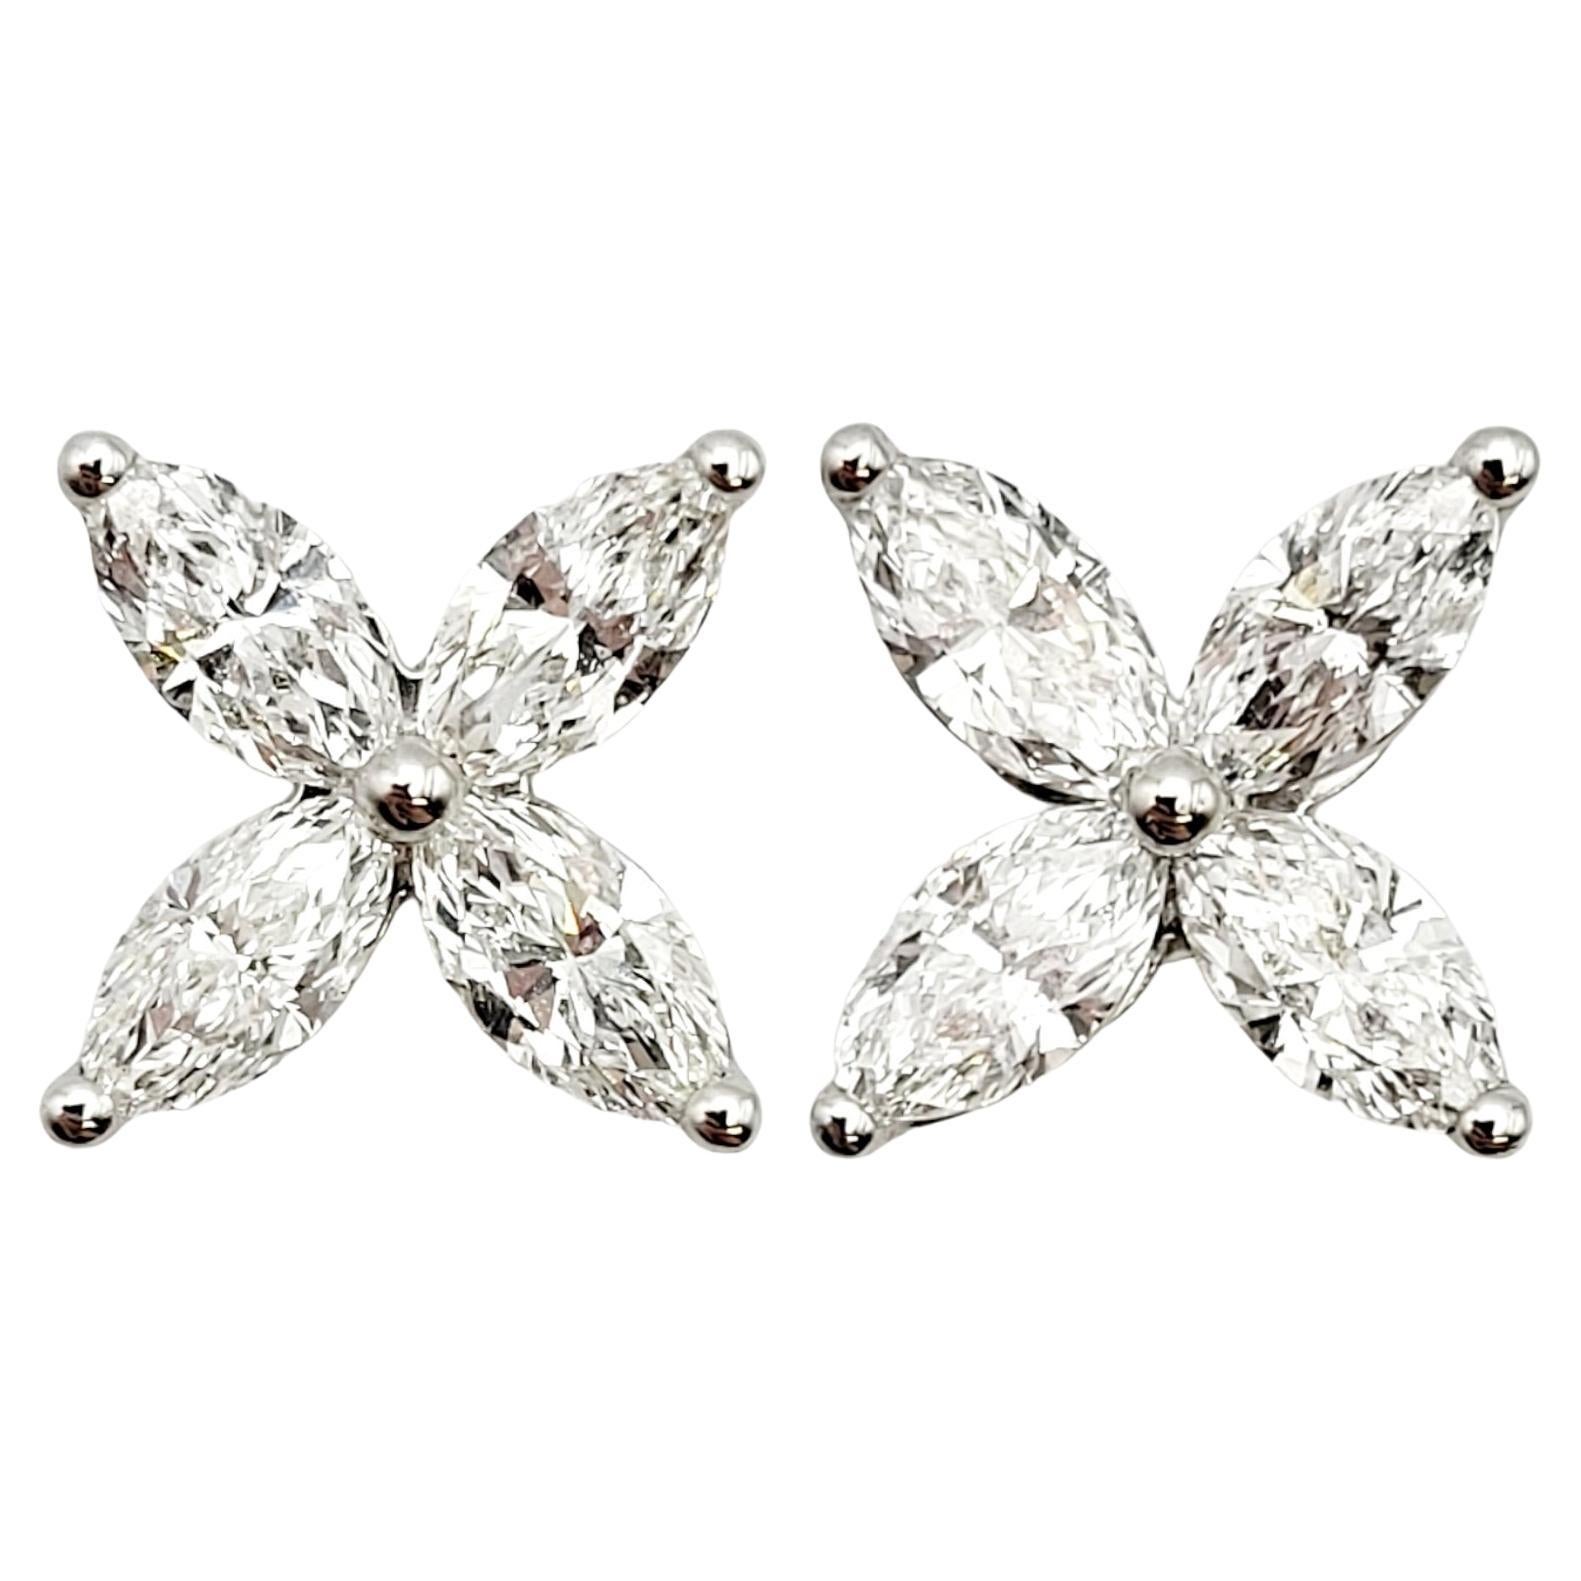 Tiffany & Co. Victoria Medium .92 Carats Diamond Stud Earrings in Platinum